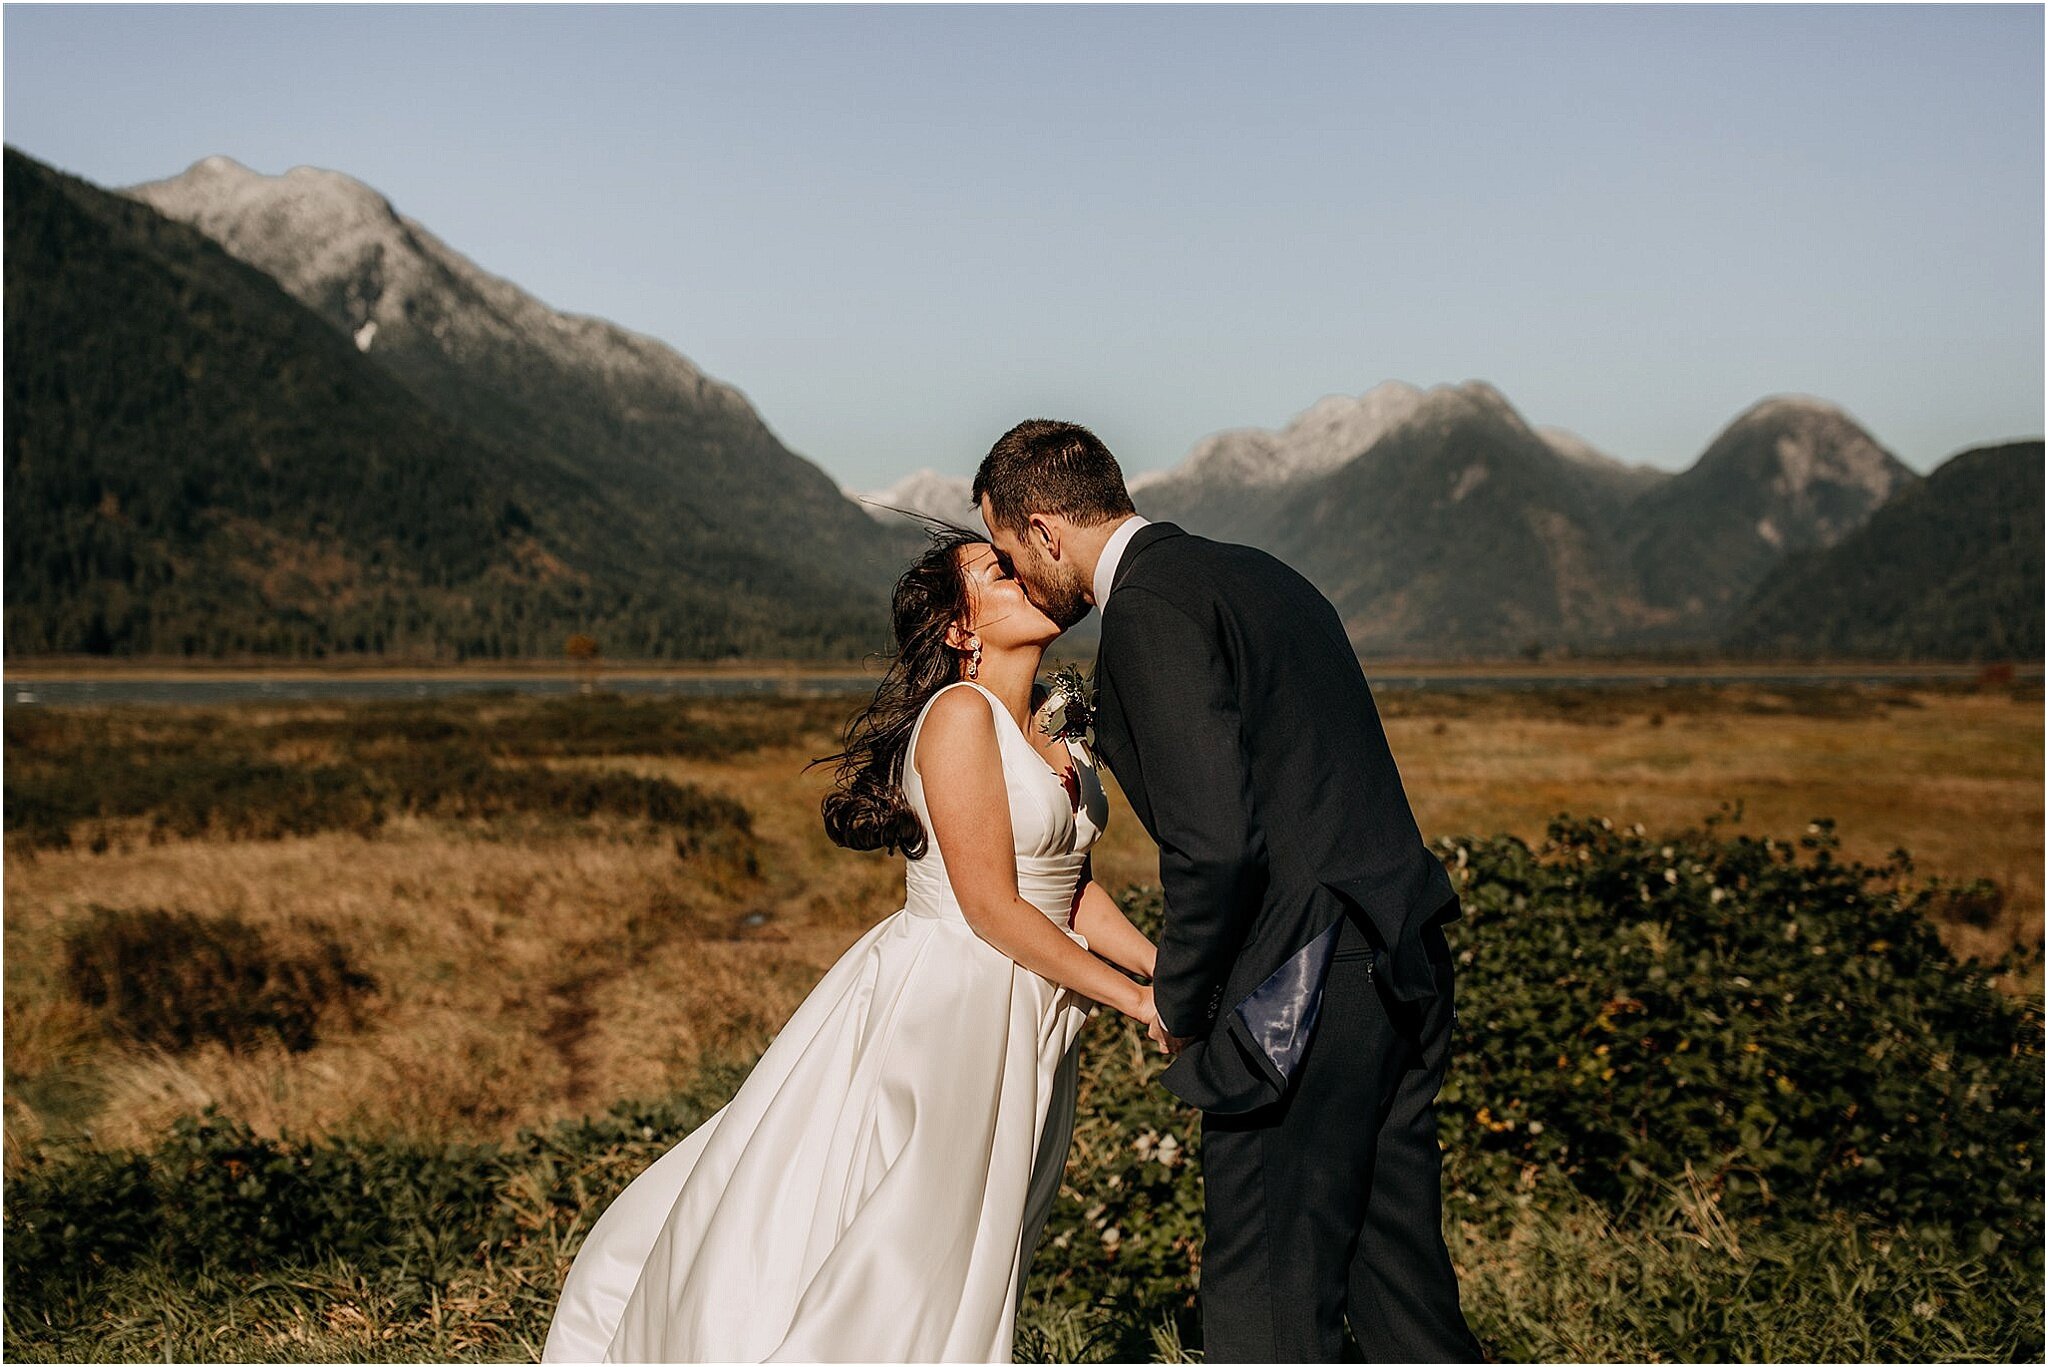 pitt lake elopement bride and groom first kiss